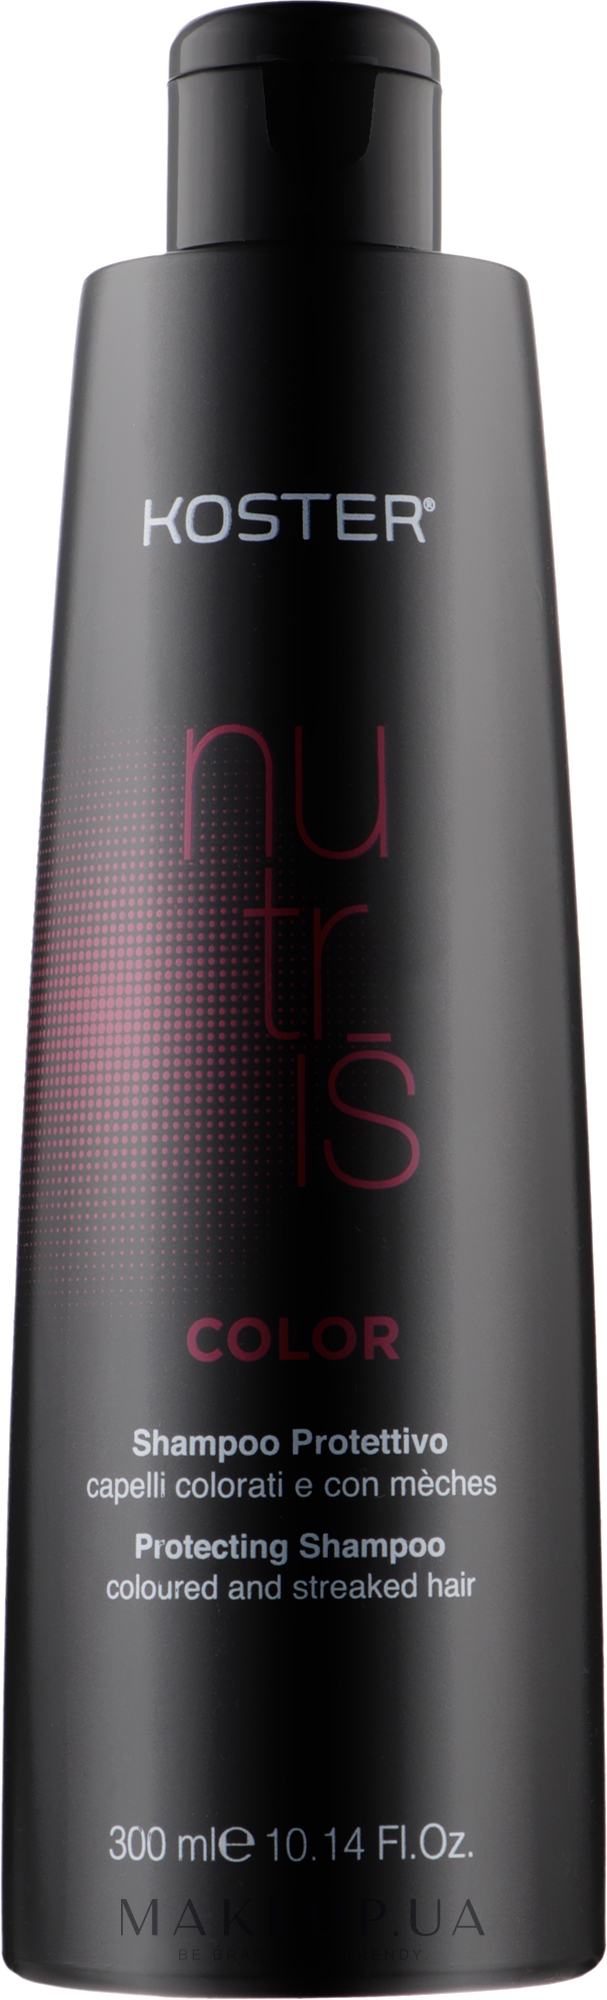 Шампунь для фарбованого й мельованого волосся - Koster Nutris Color Shampoo — фото 300ml